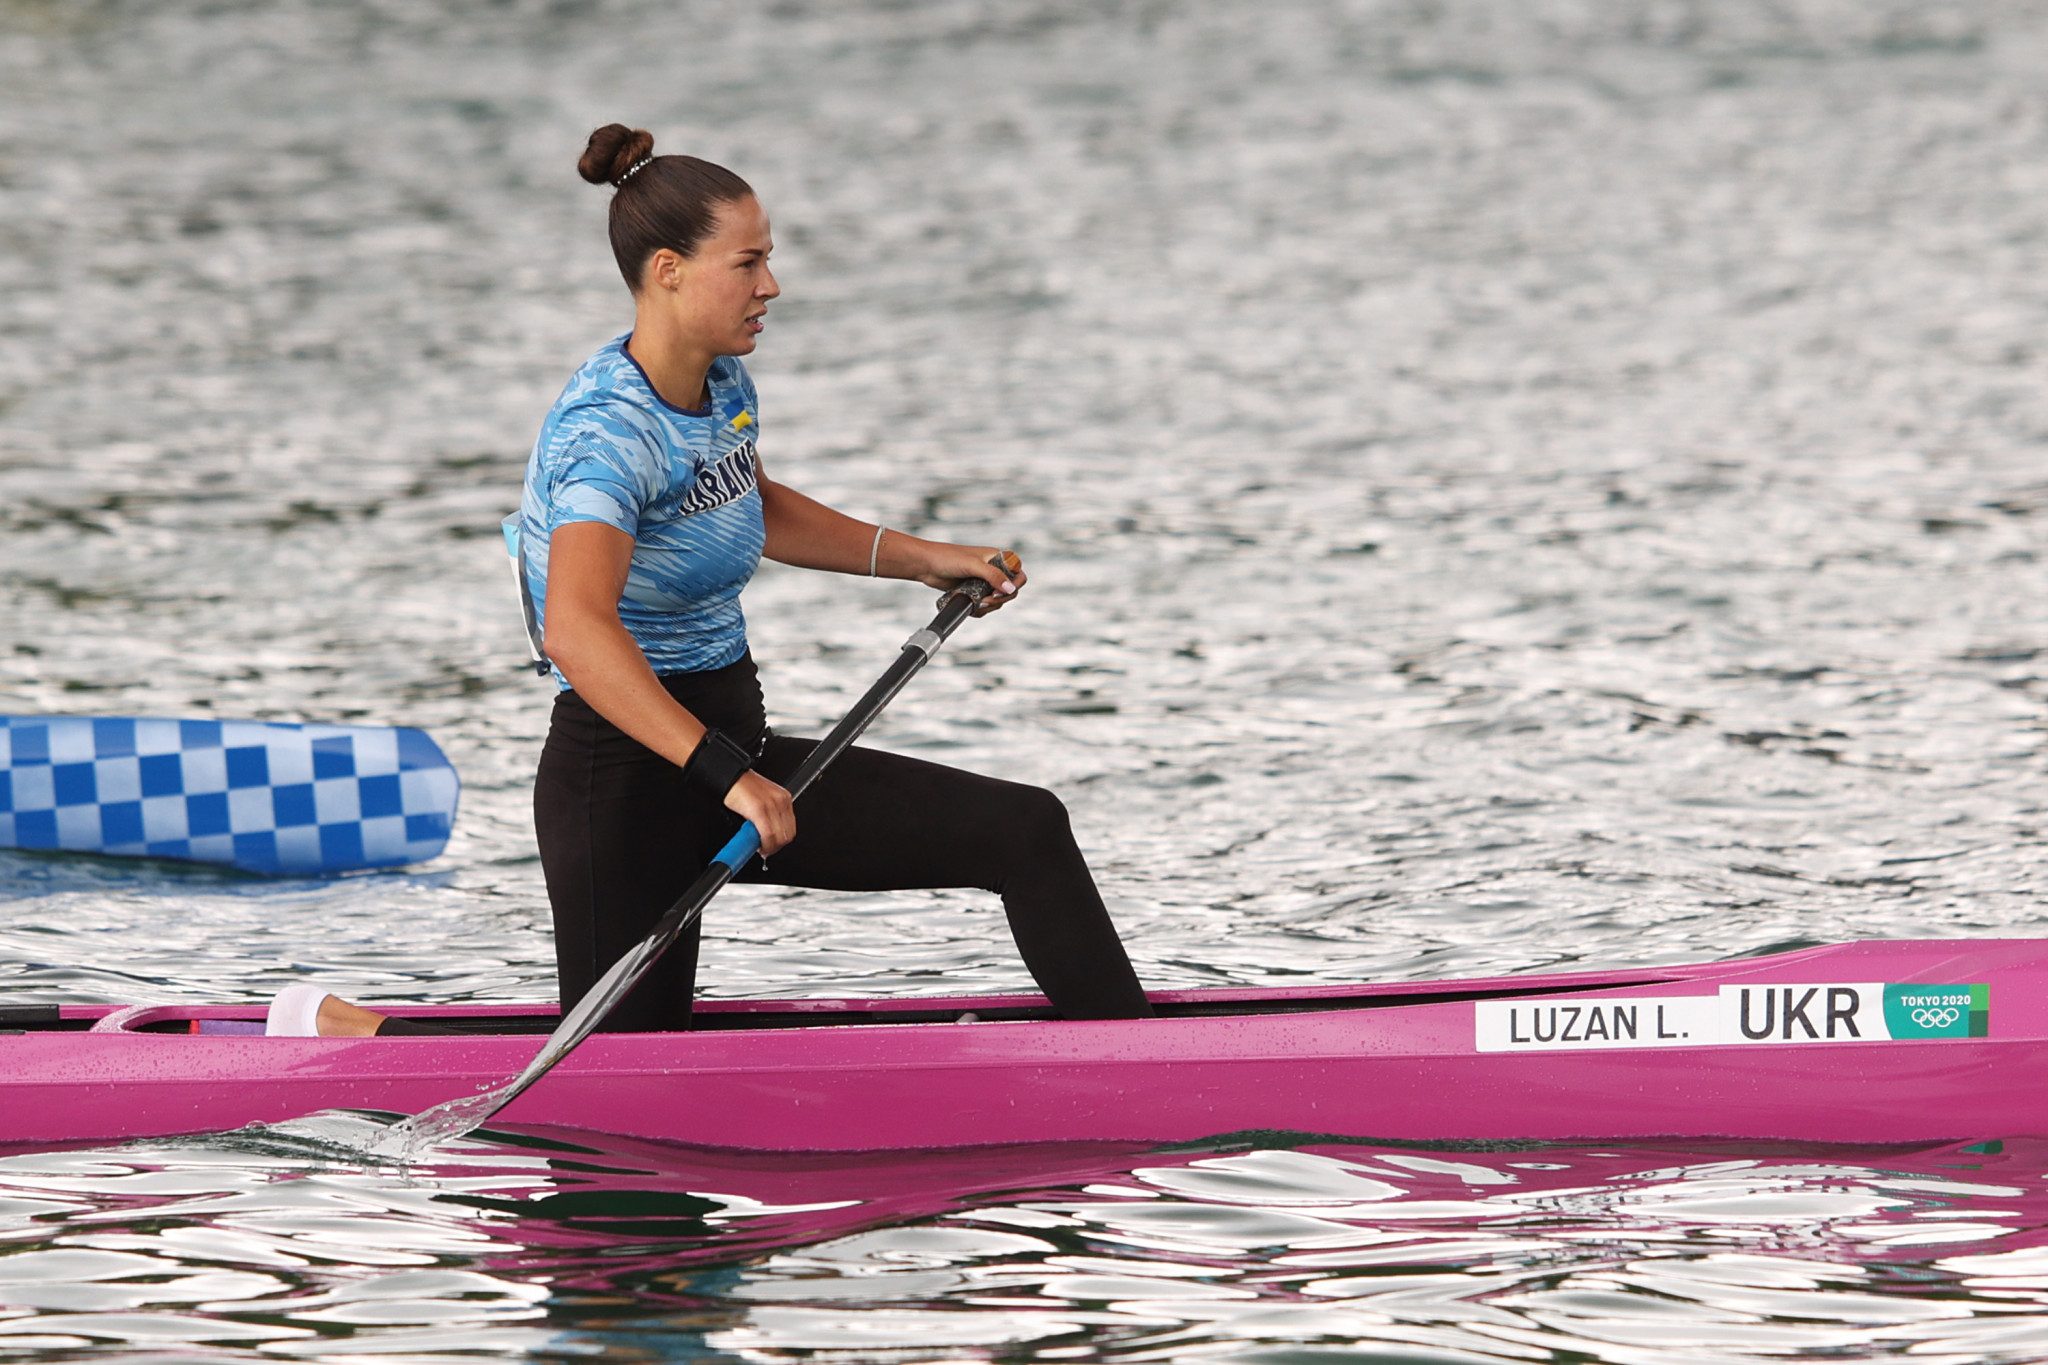 Ukraine's Liudmyla Luzan won two gold medals in Poznań ©Getty Images